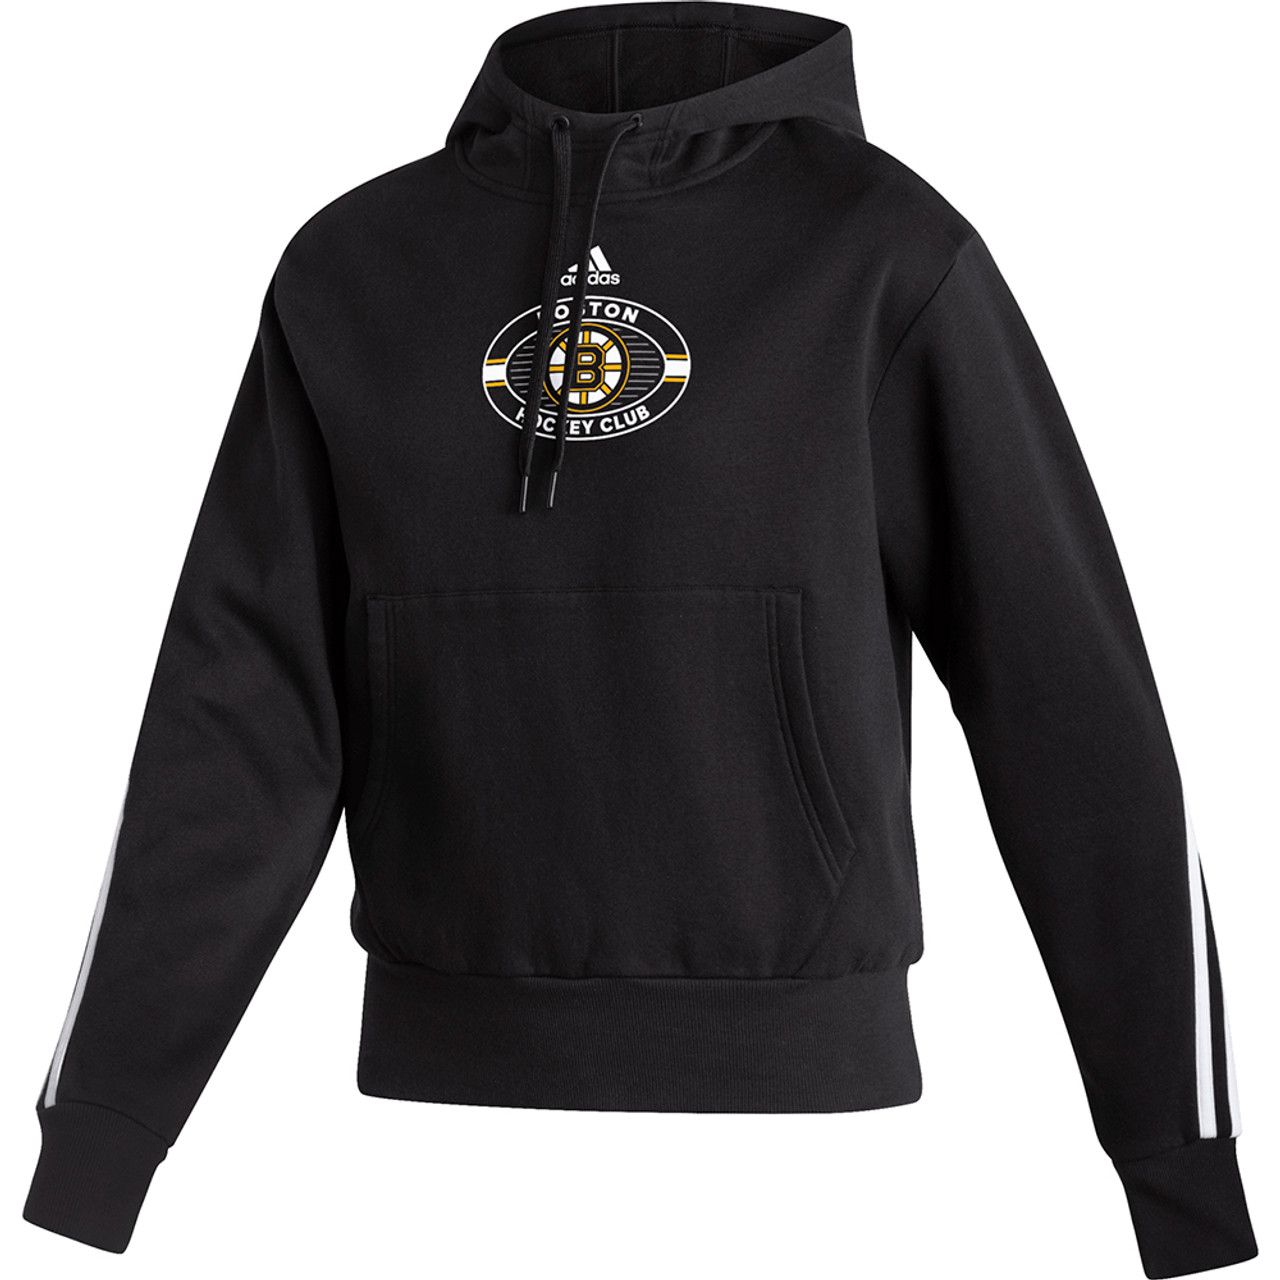 Bruins Centennial Slub Pullover Hood (3XL) | Boston ProShop